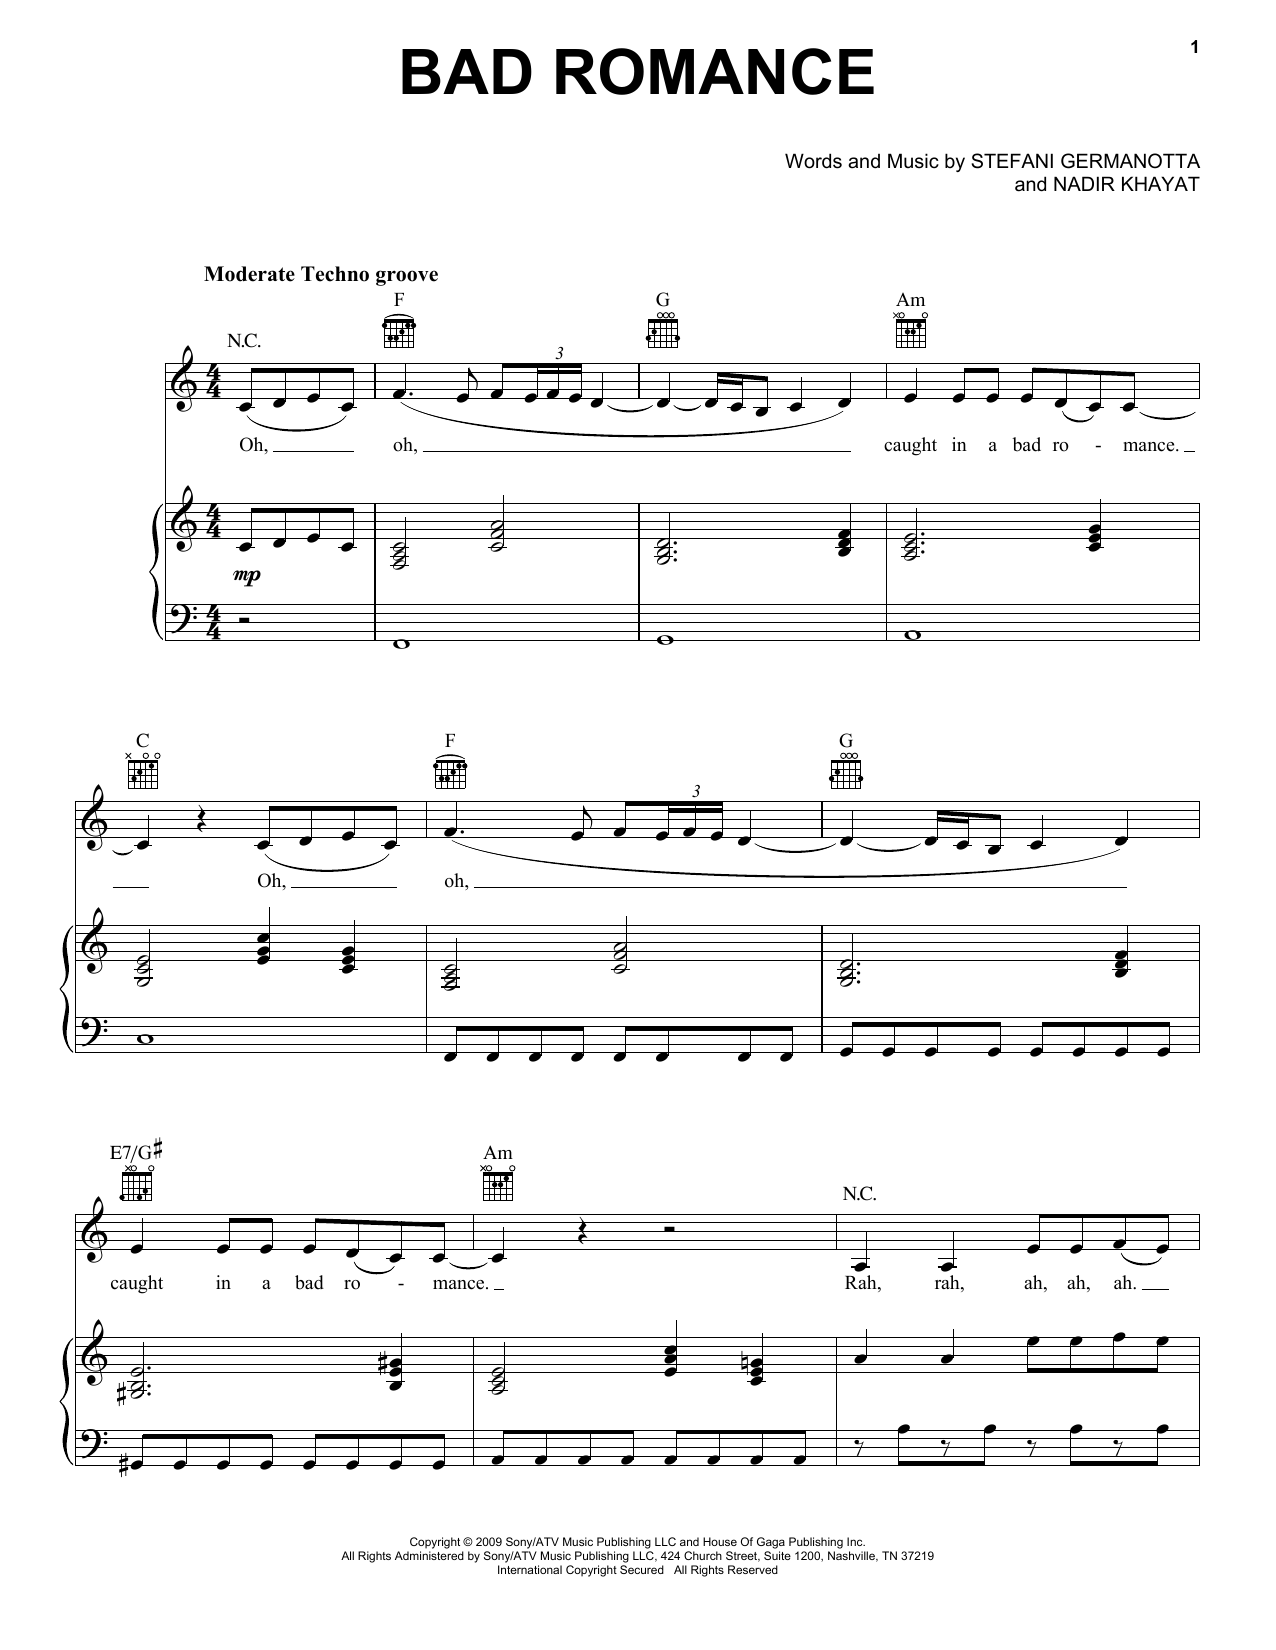 Lady Gaga Bad Romance Sheet Music Notes & Chords for Trumpet - Download or Print PDF